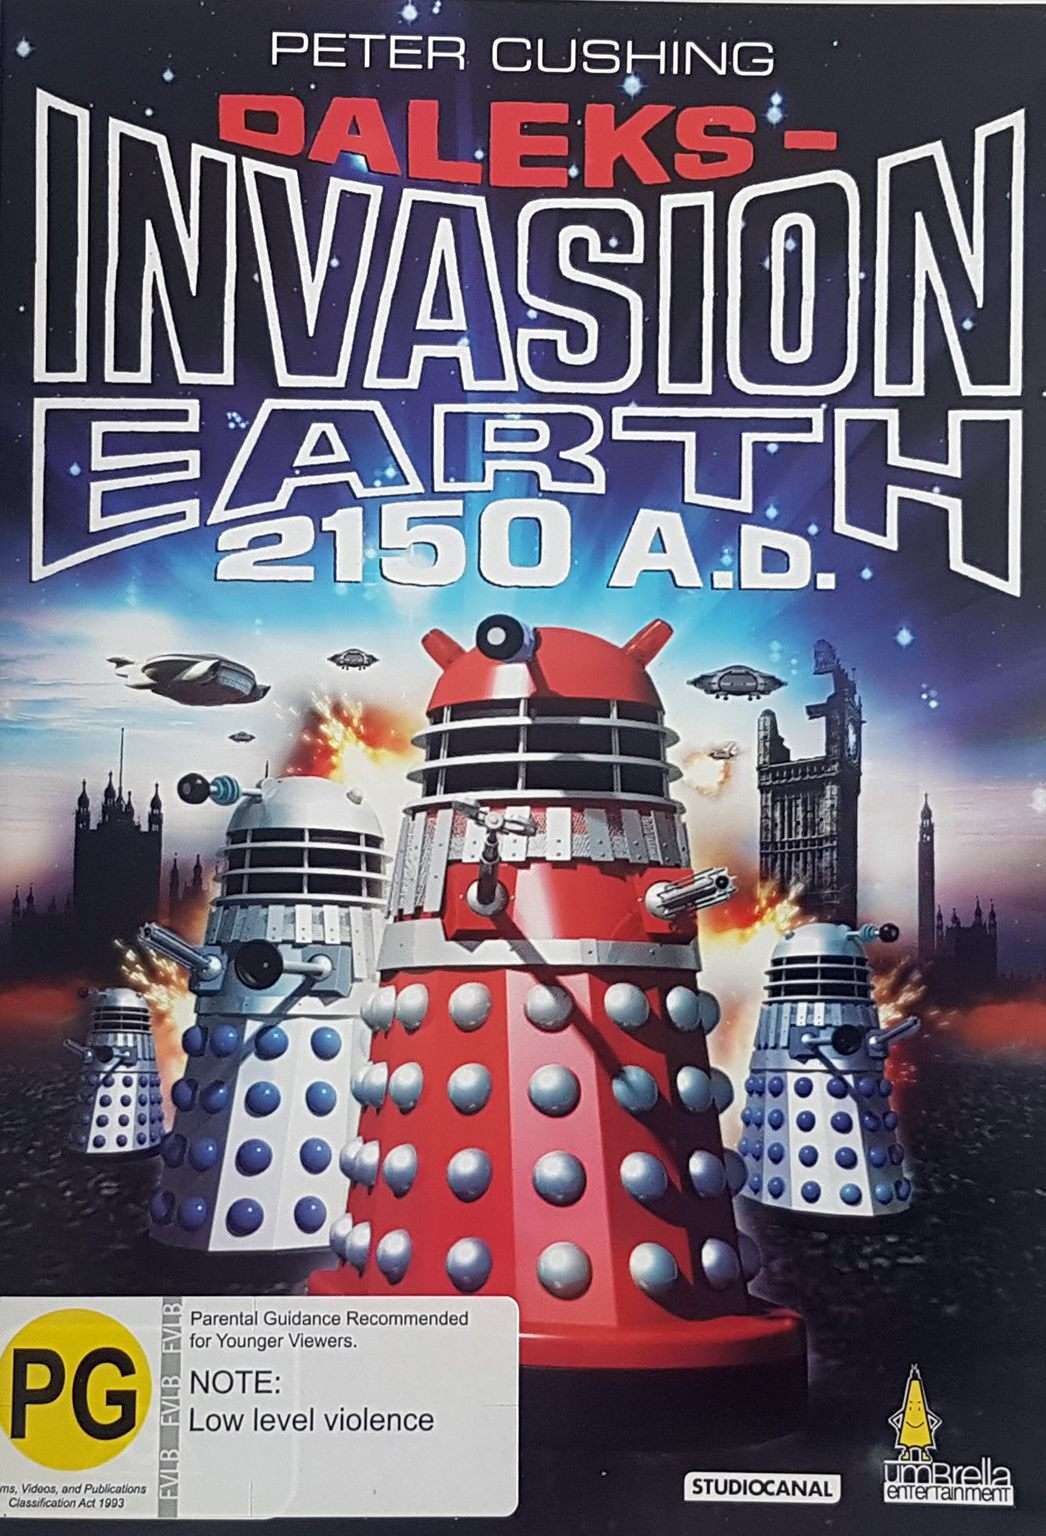 Daleks: Invasion Earth 2150 A.D.